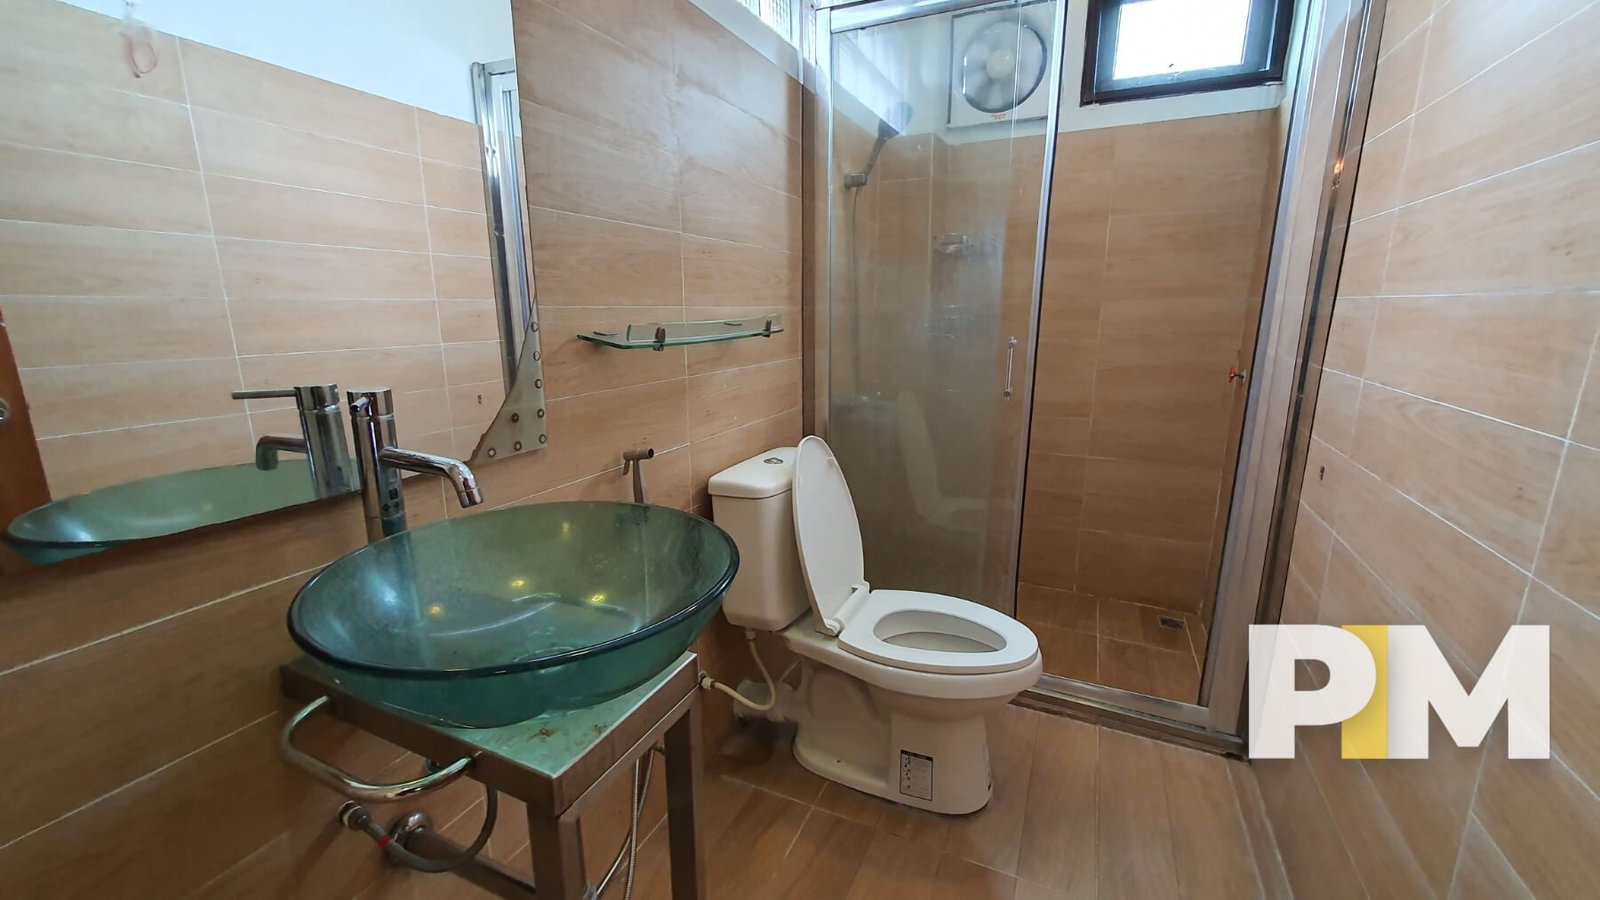 Tiolet room with sink - Myanmar Real Estate (2)